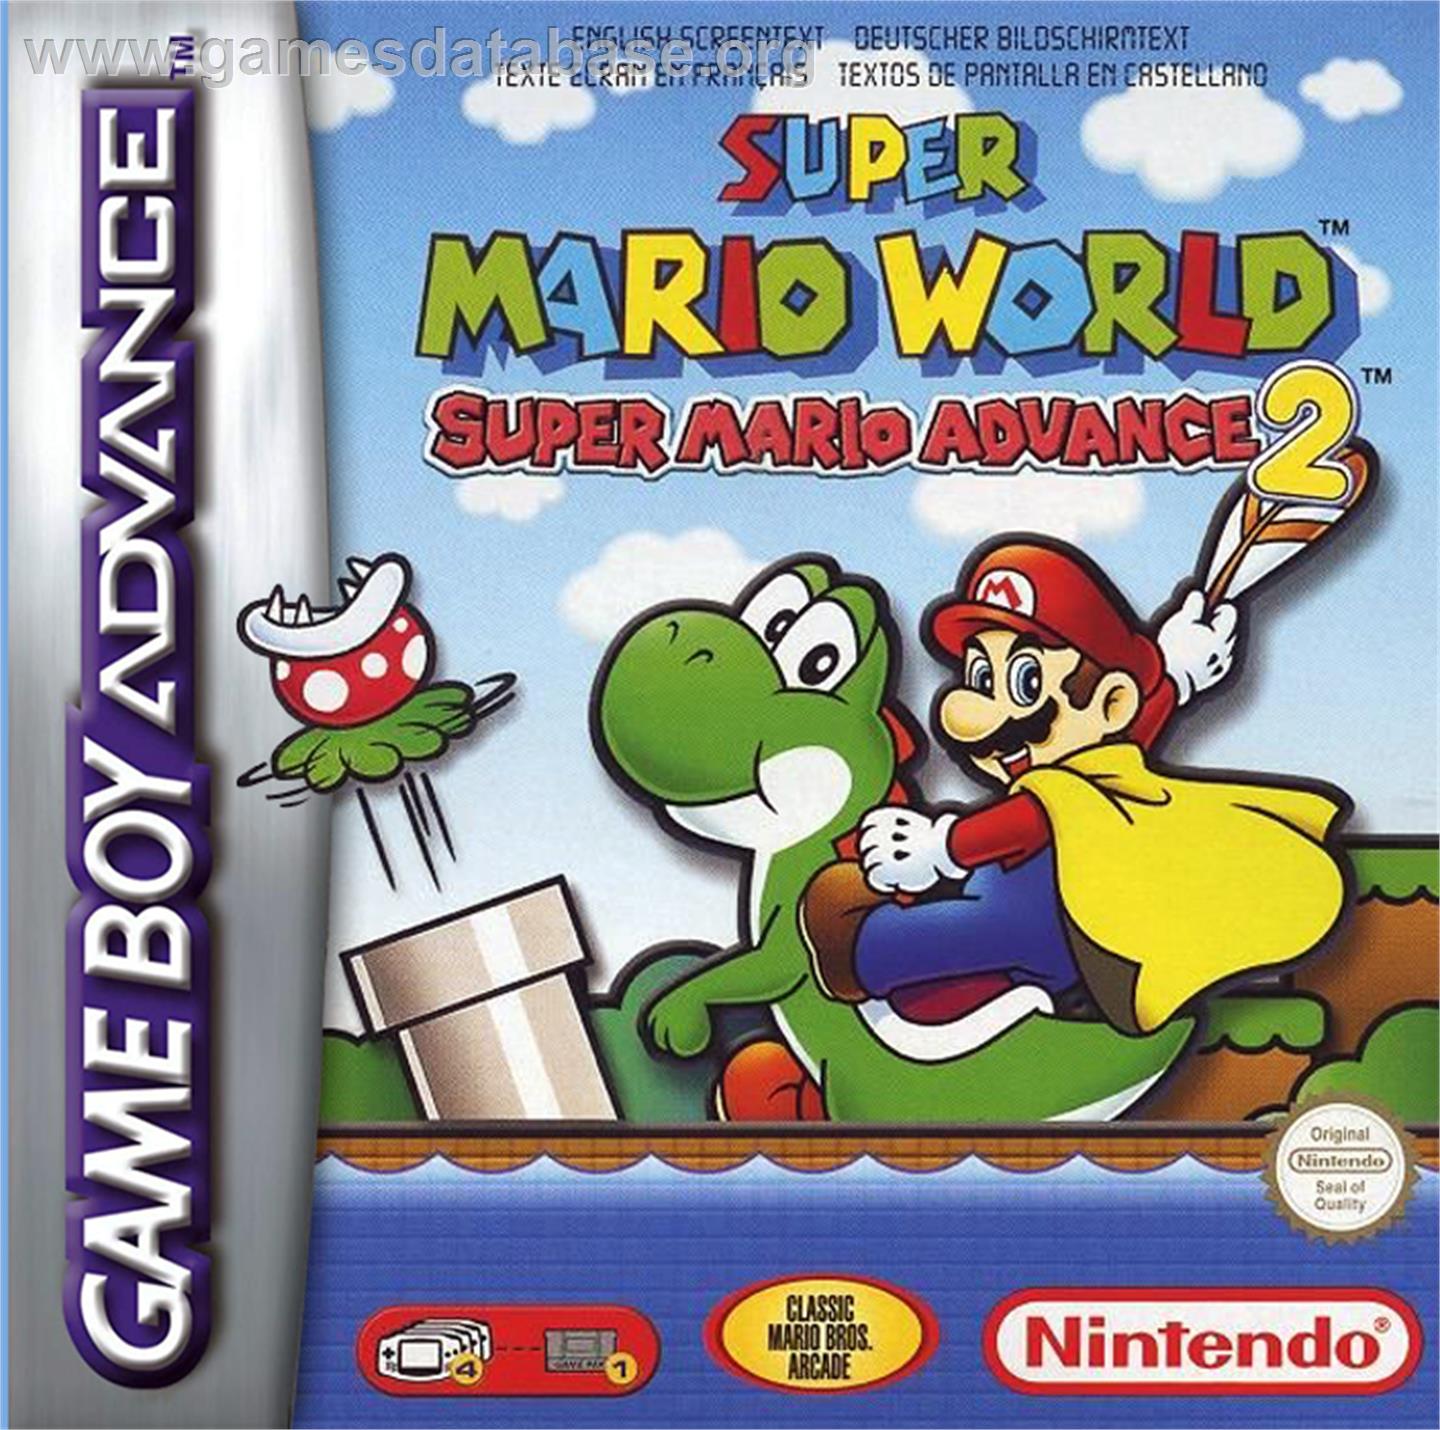 Super Mario World: Super Mario Advance 2 - Nintendo Game Boy Advance - Artwork - Box